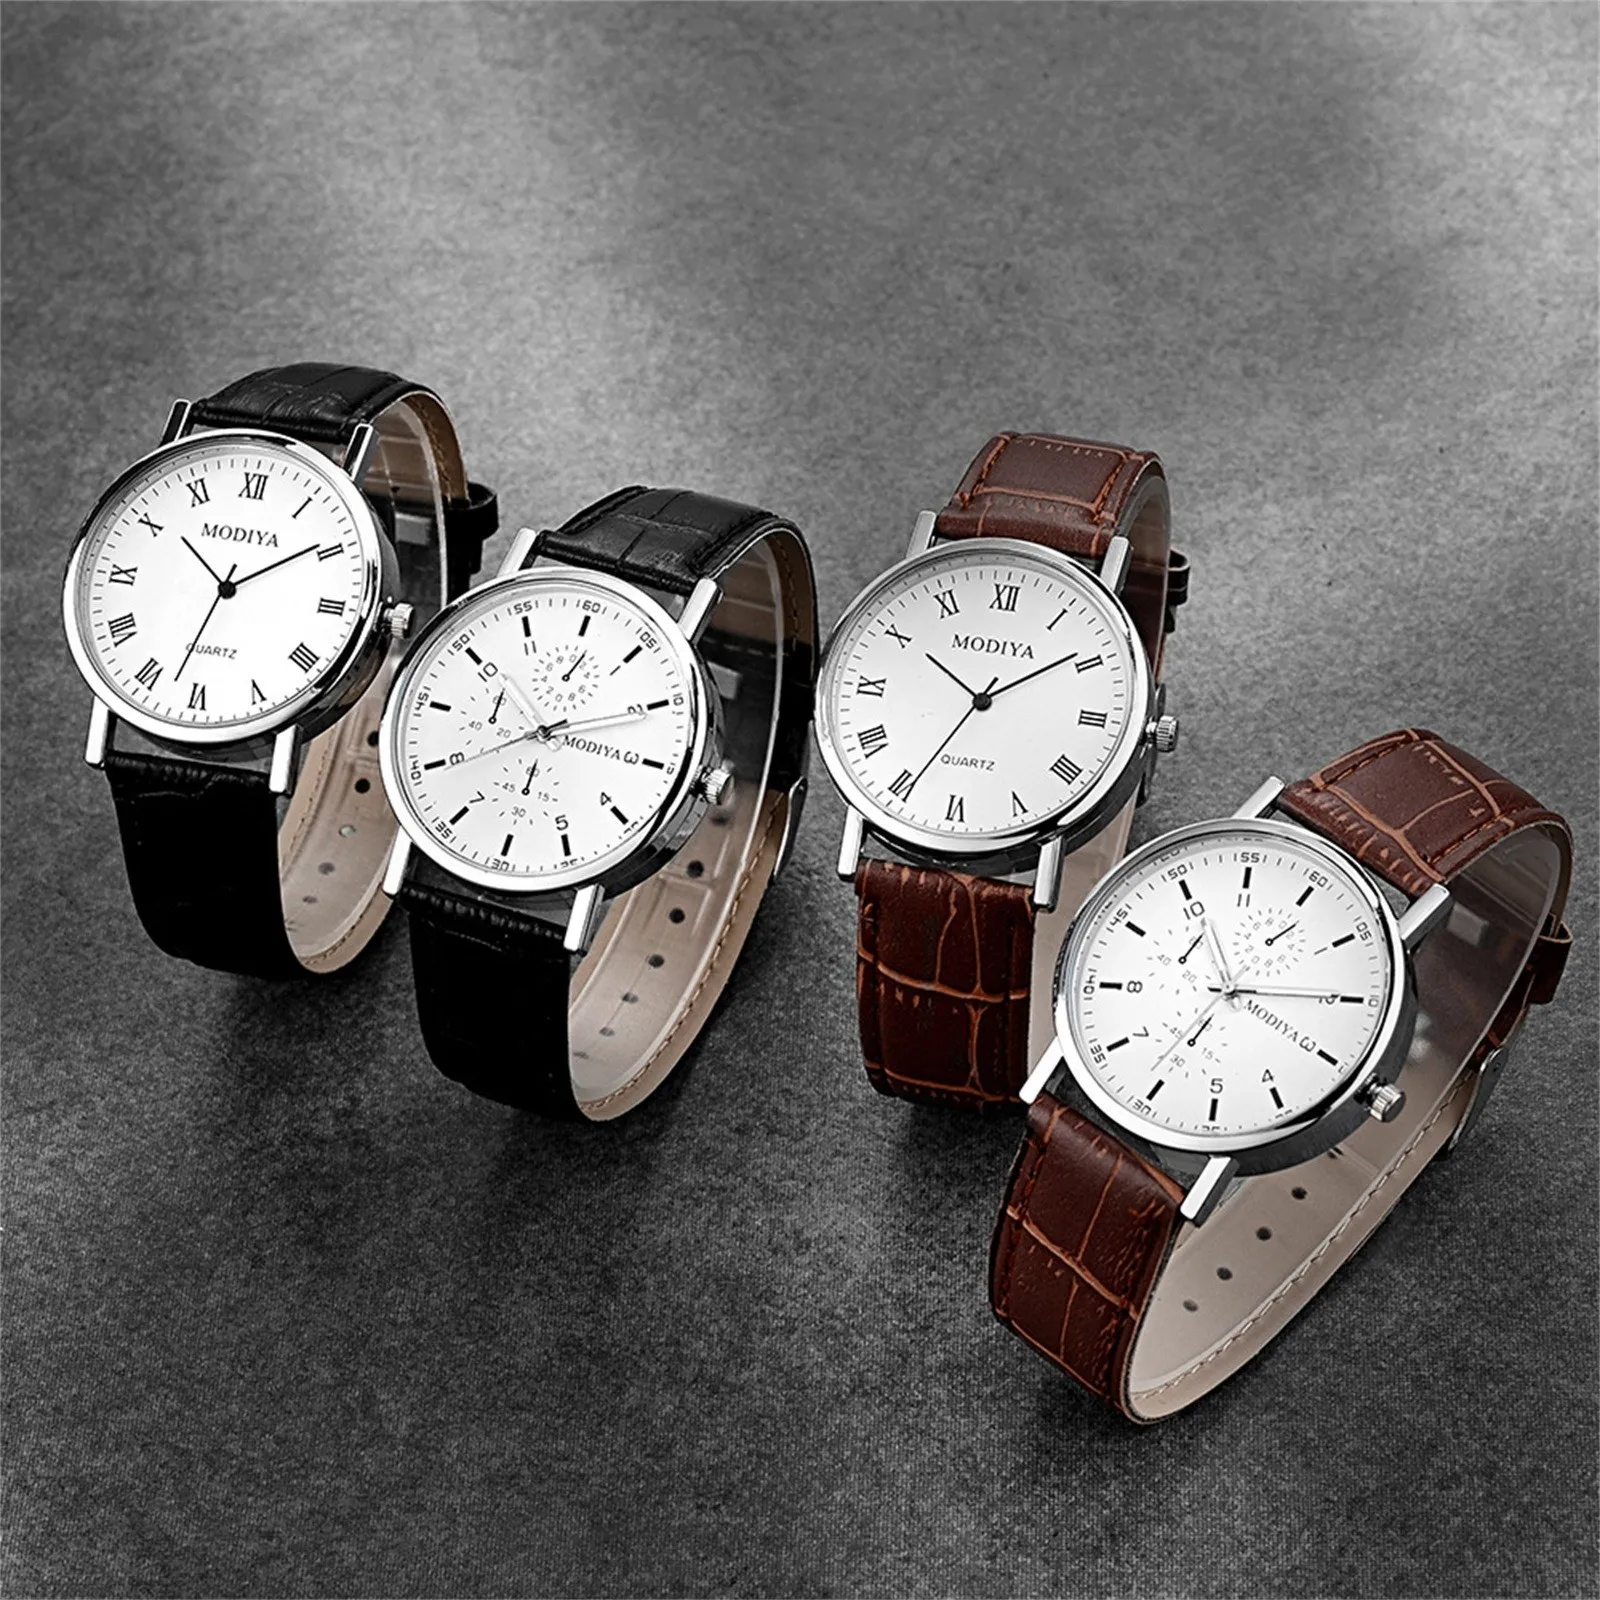 

New Men'S Watch Stainless Steel Leather Quartz Watch, Men'S Business Watch Calendar Glow Date Men'S Leisure Watch Reloj Hombre